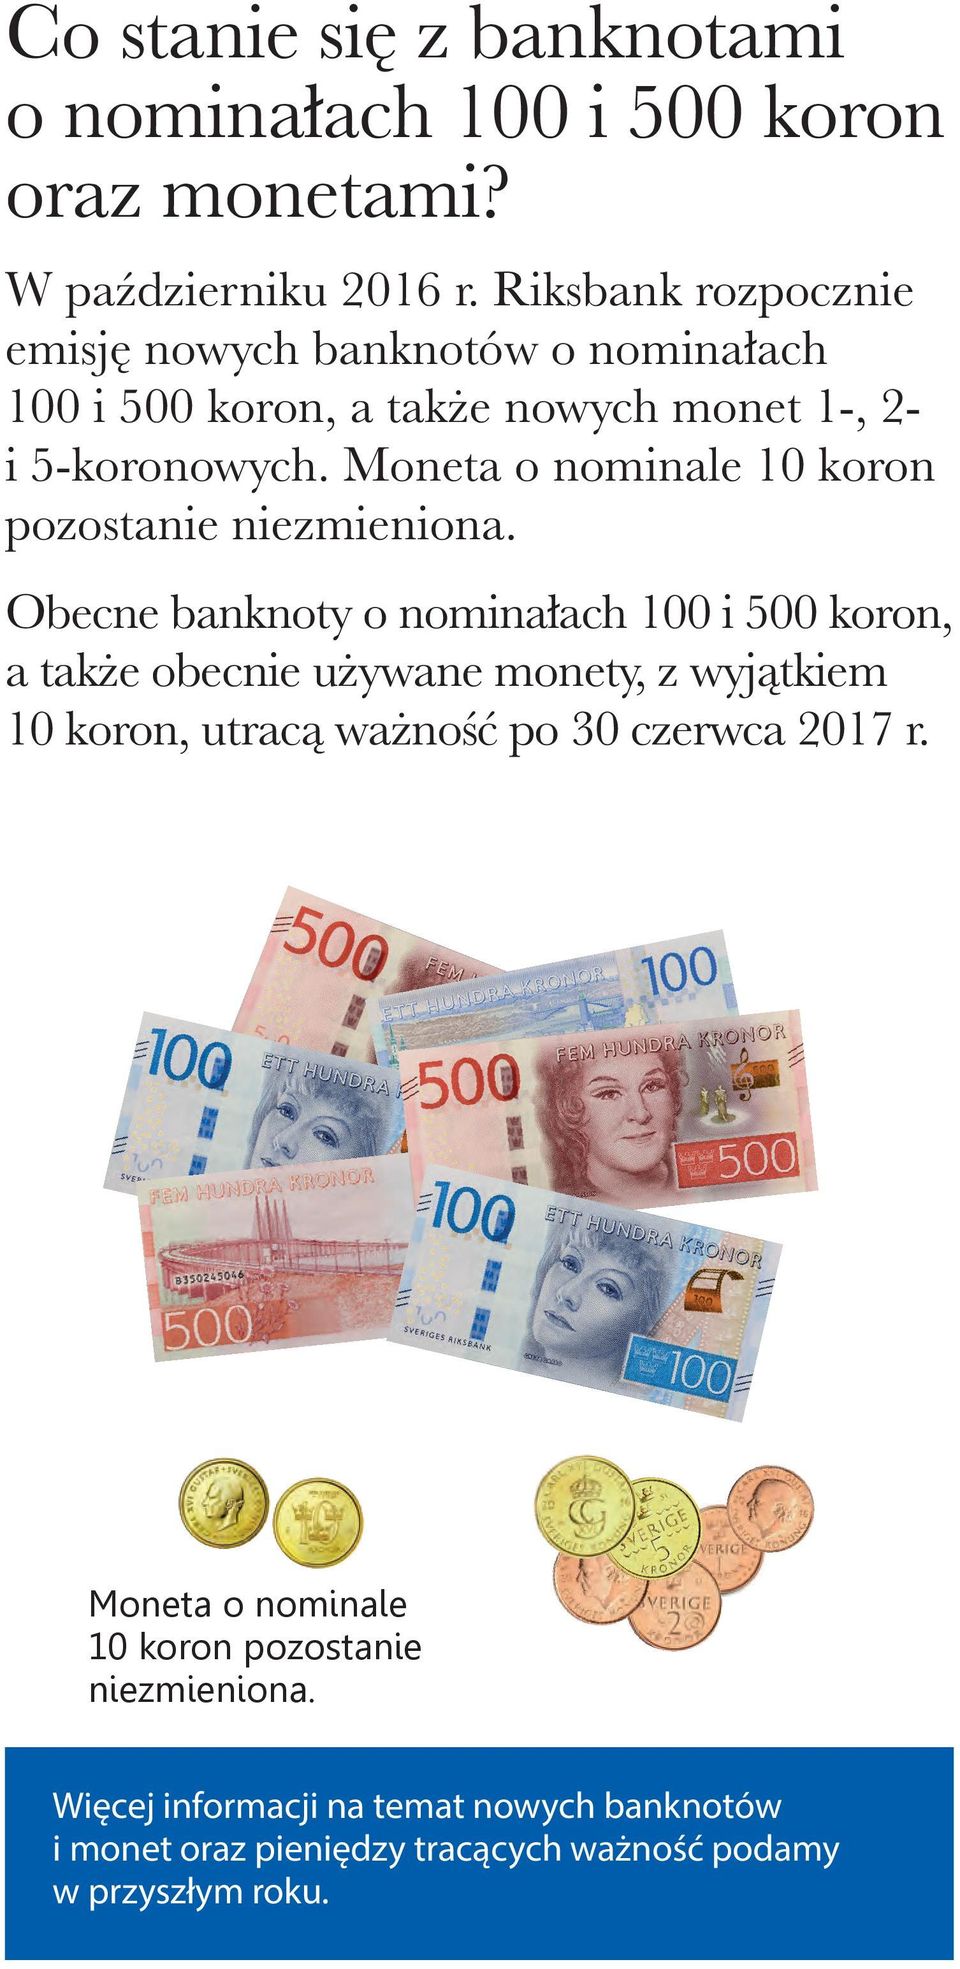 Moneta o nominale 10 koron pozostanie niezmieniona.